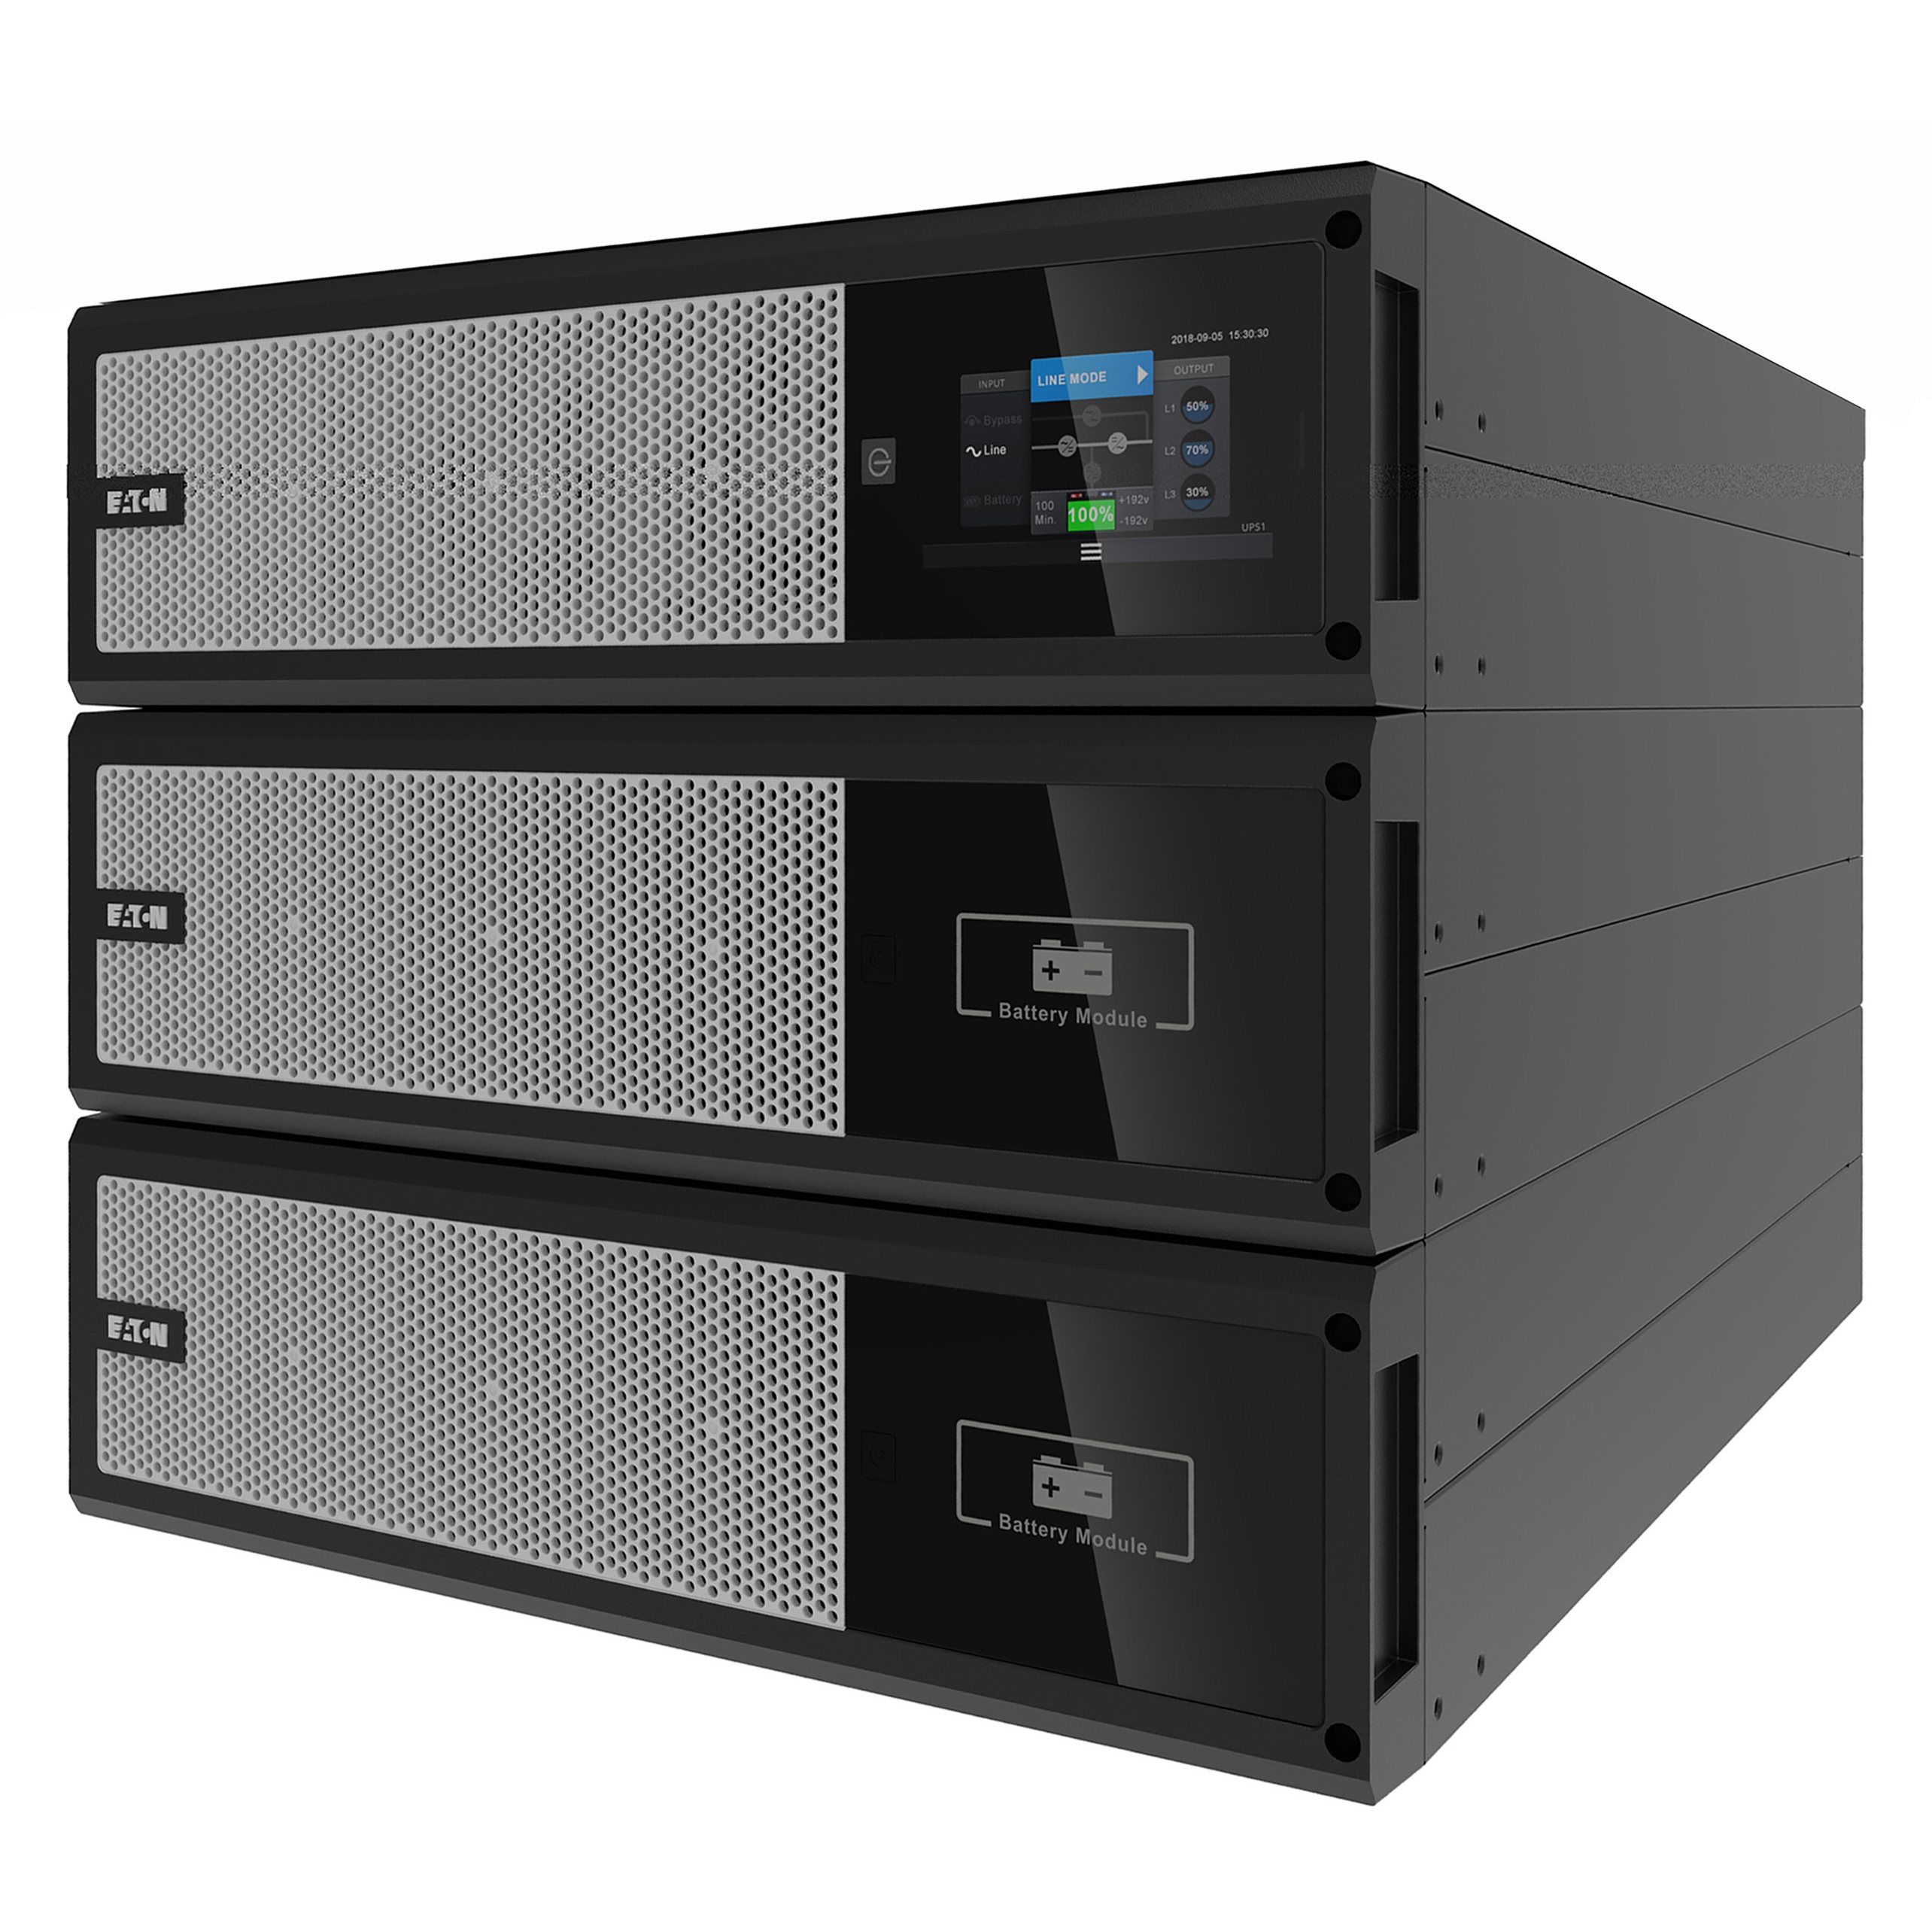   Onduleurs centraliss et Data Center  15KW Eaton 93PX Netpack 15kW module de puissance + 2EBM 93PX15KIRTN